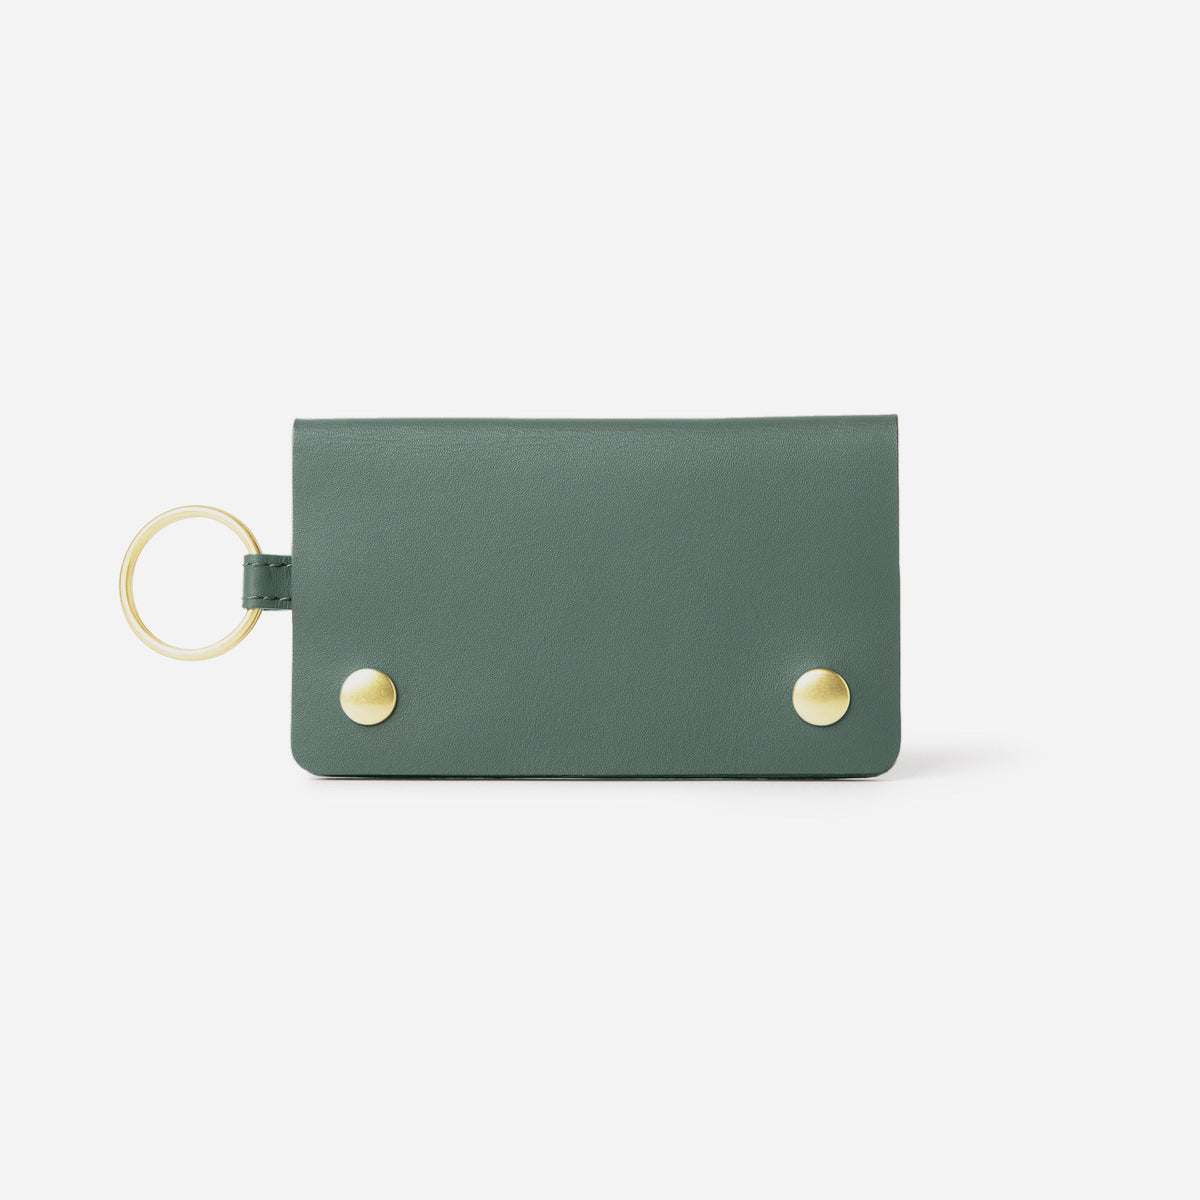 Leather Key Wallet